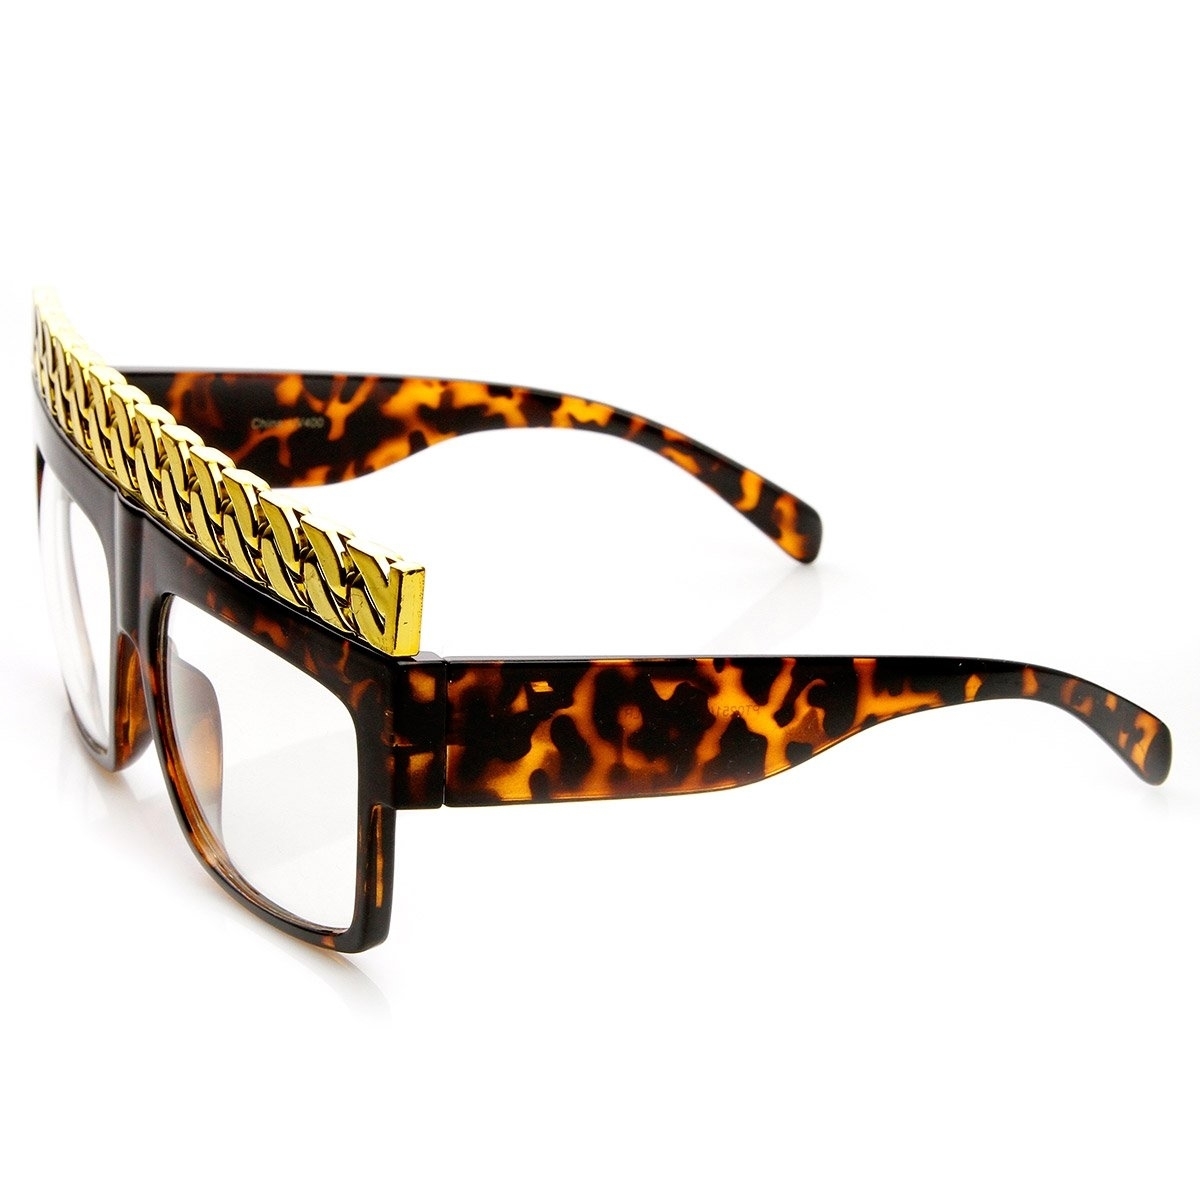 High Fashion Bold Chain Top Square Clear Lens Sunglasses - Shiny Black